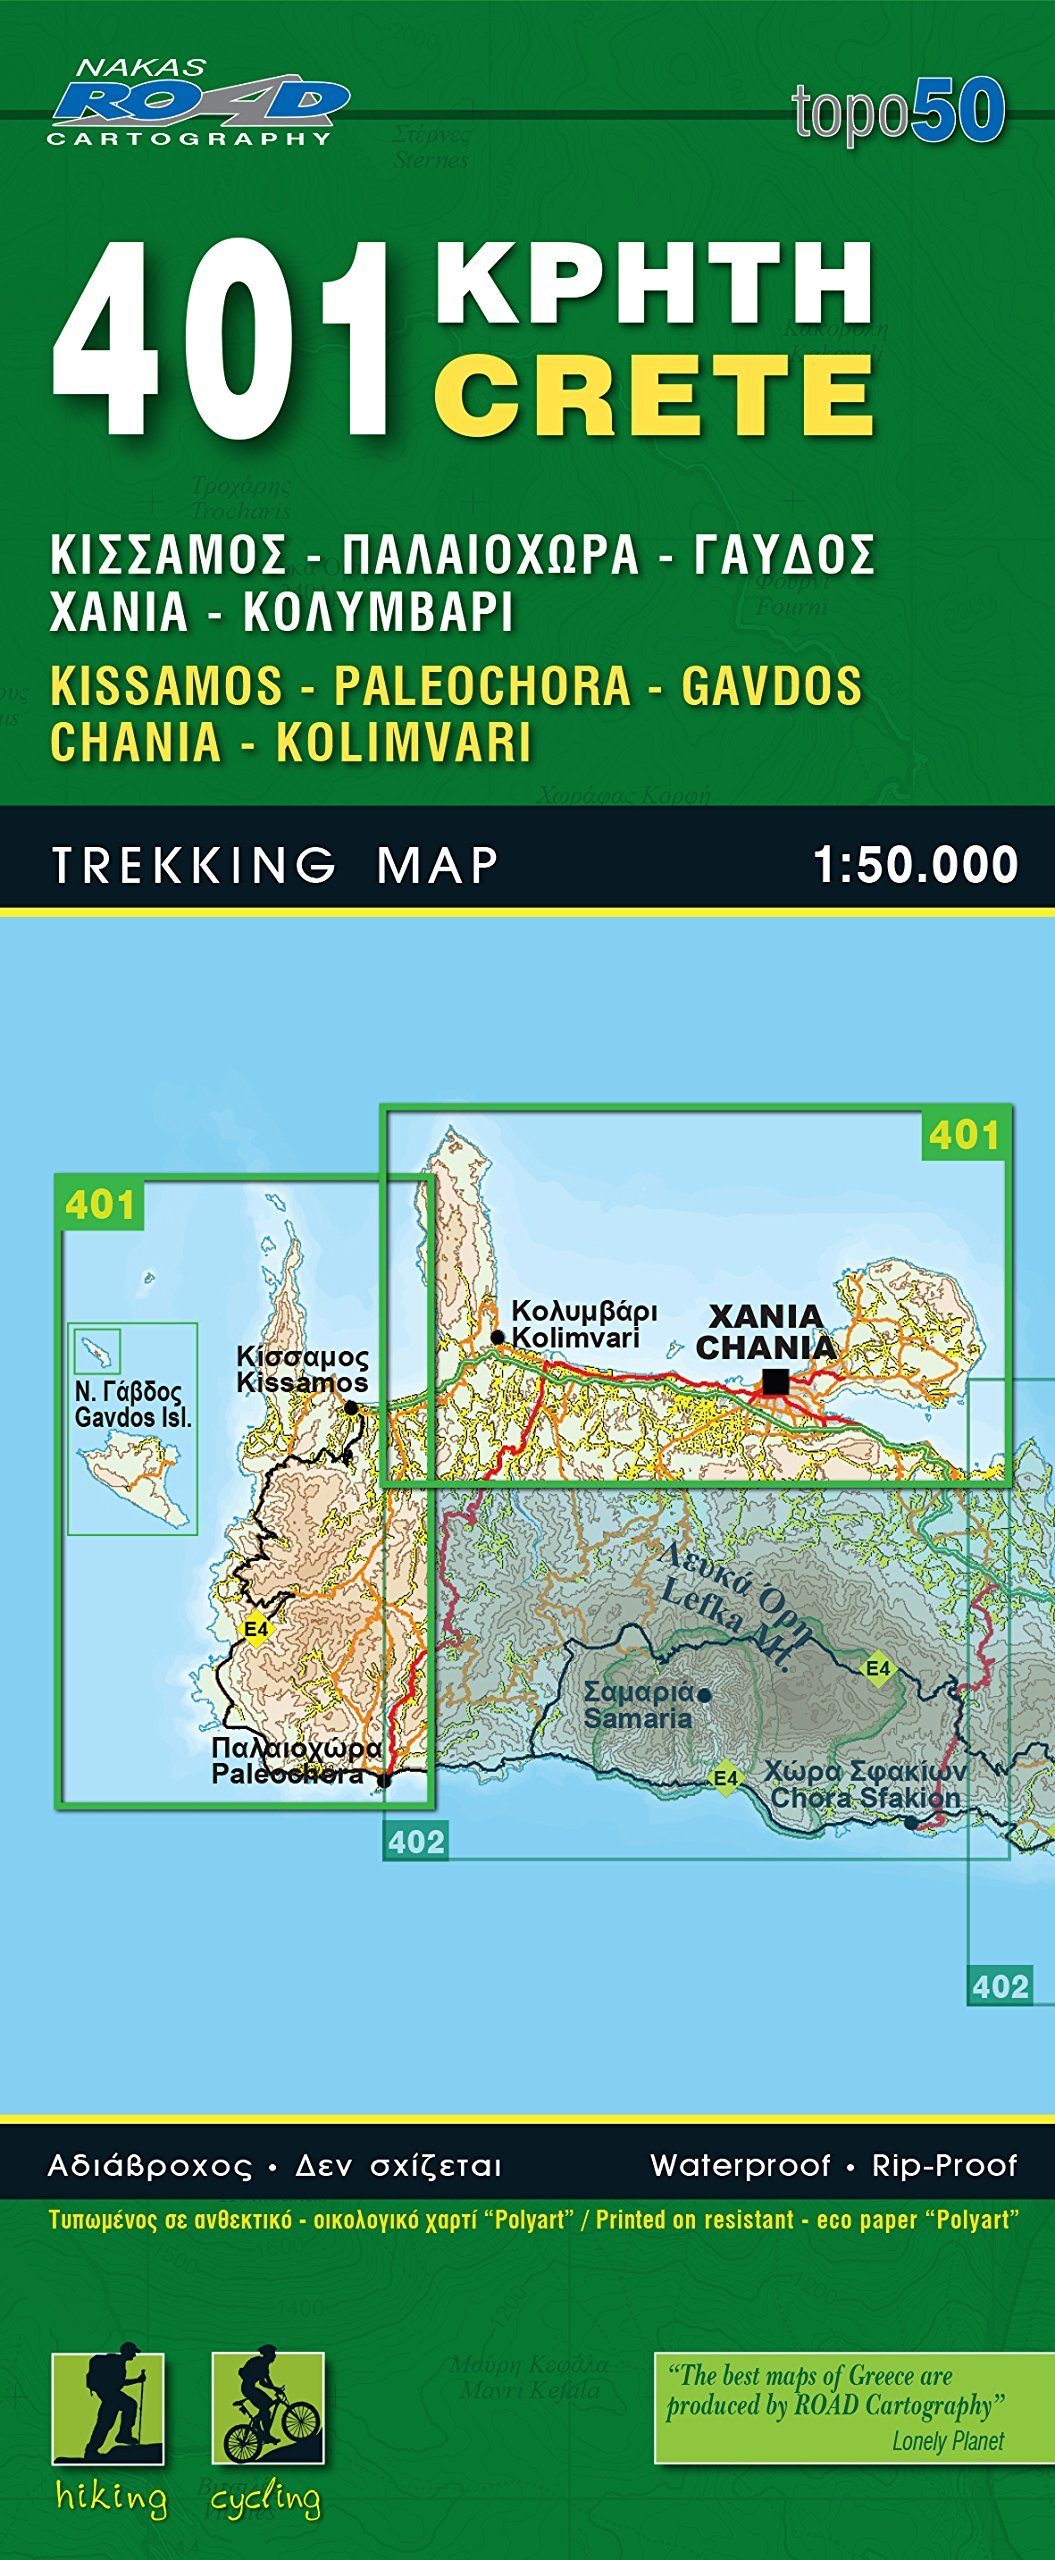 Carte de randonnée n° 401 - Crète : Kissamos, Chania, Paleochora, Gavdos, Kolimvari | Road Editions carte pliée Road Editions 